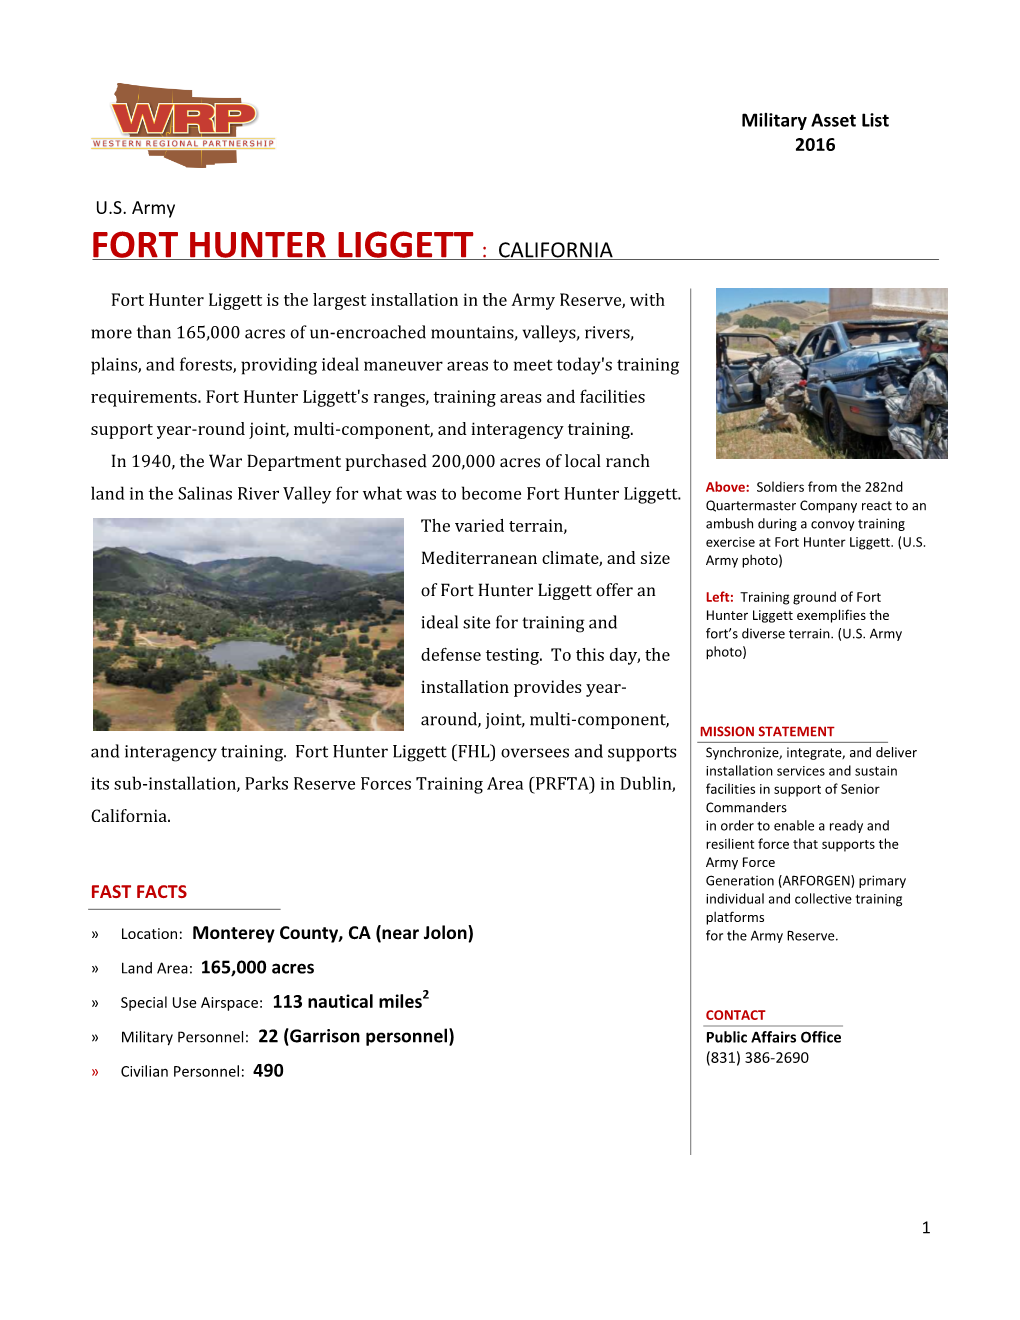 Fort Hunter Liggett : California